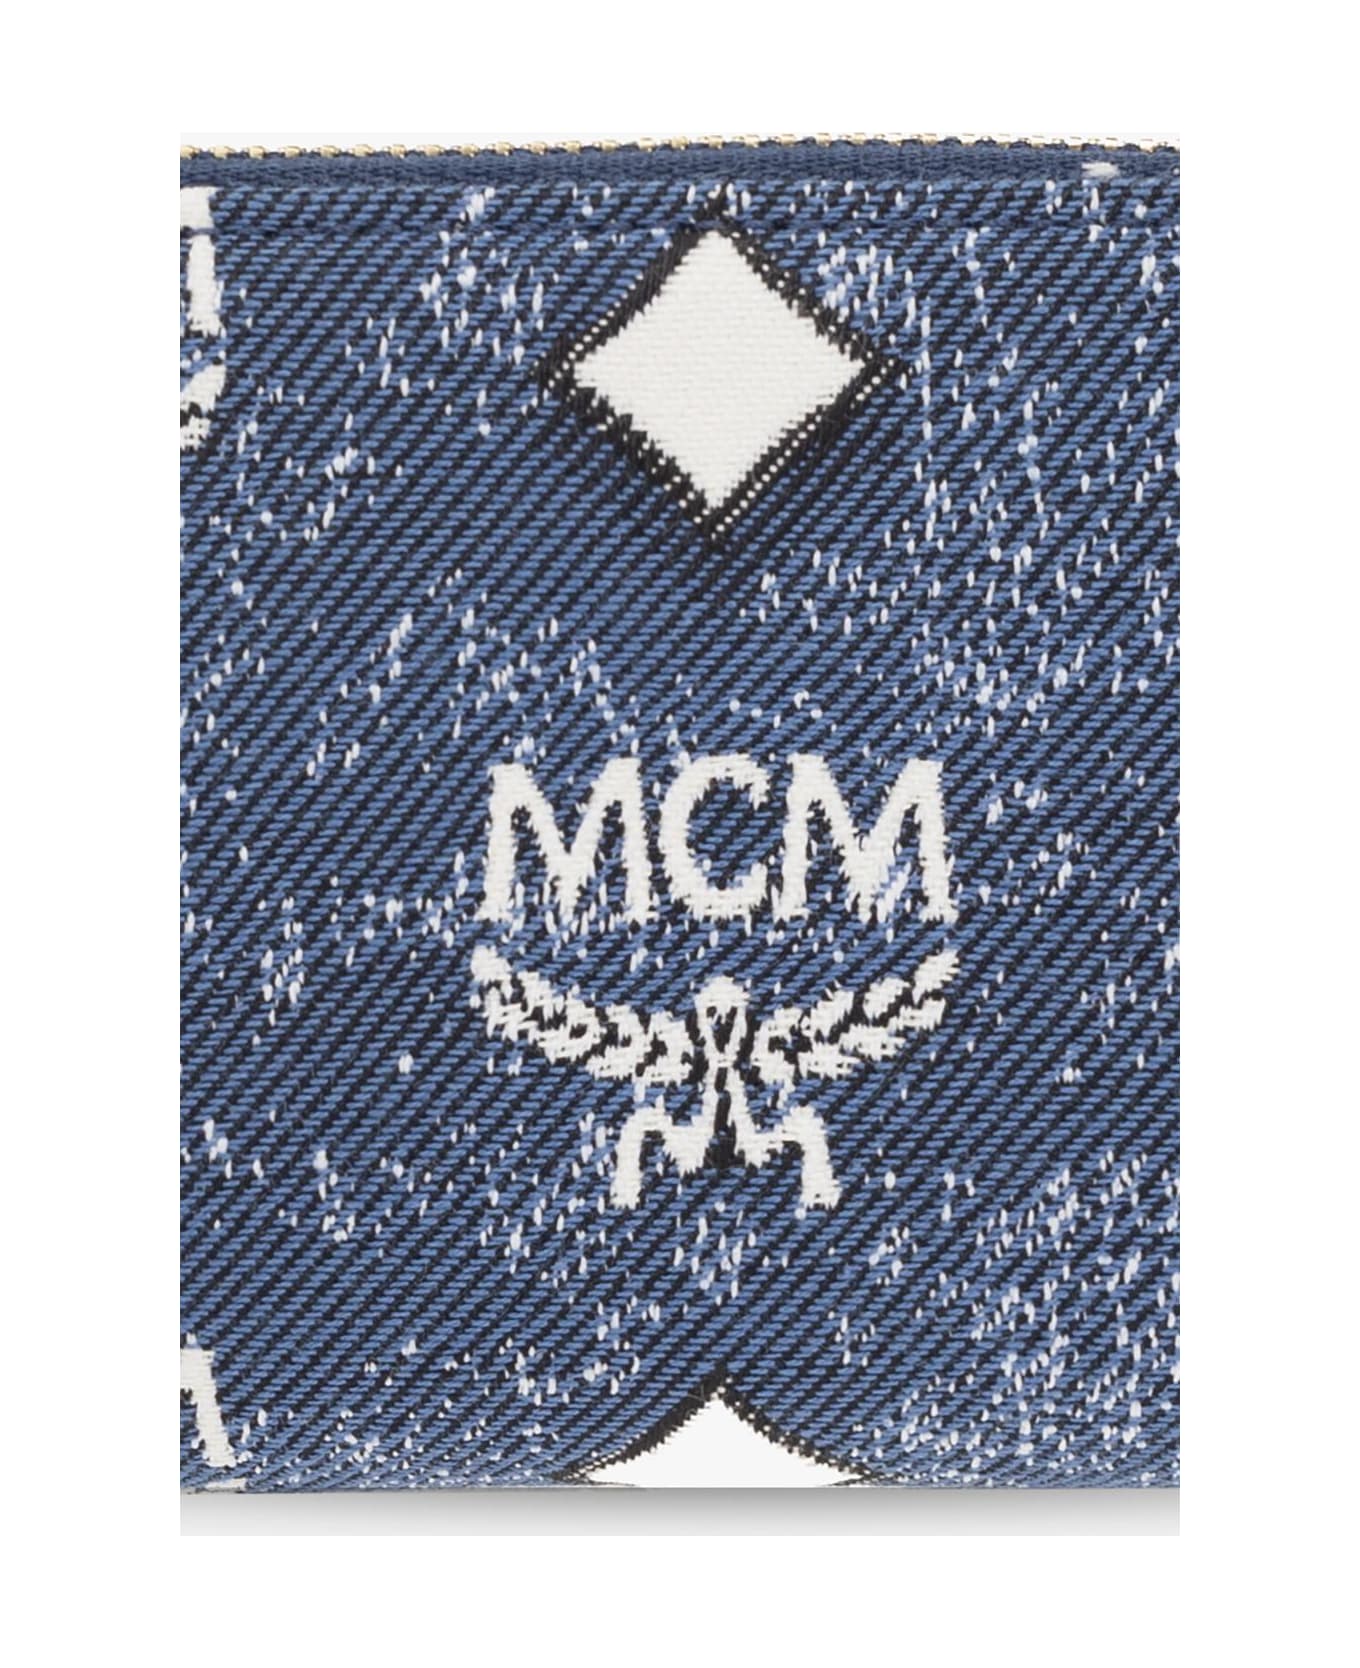 MCM Wallet With Monogram - BLUE